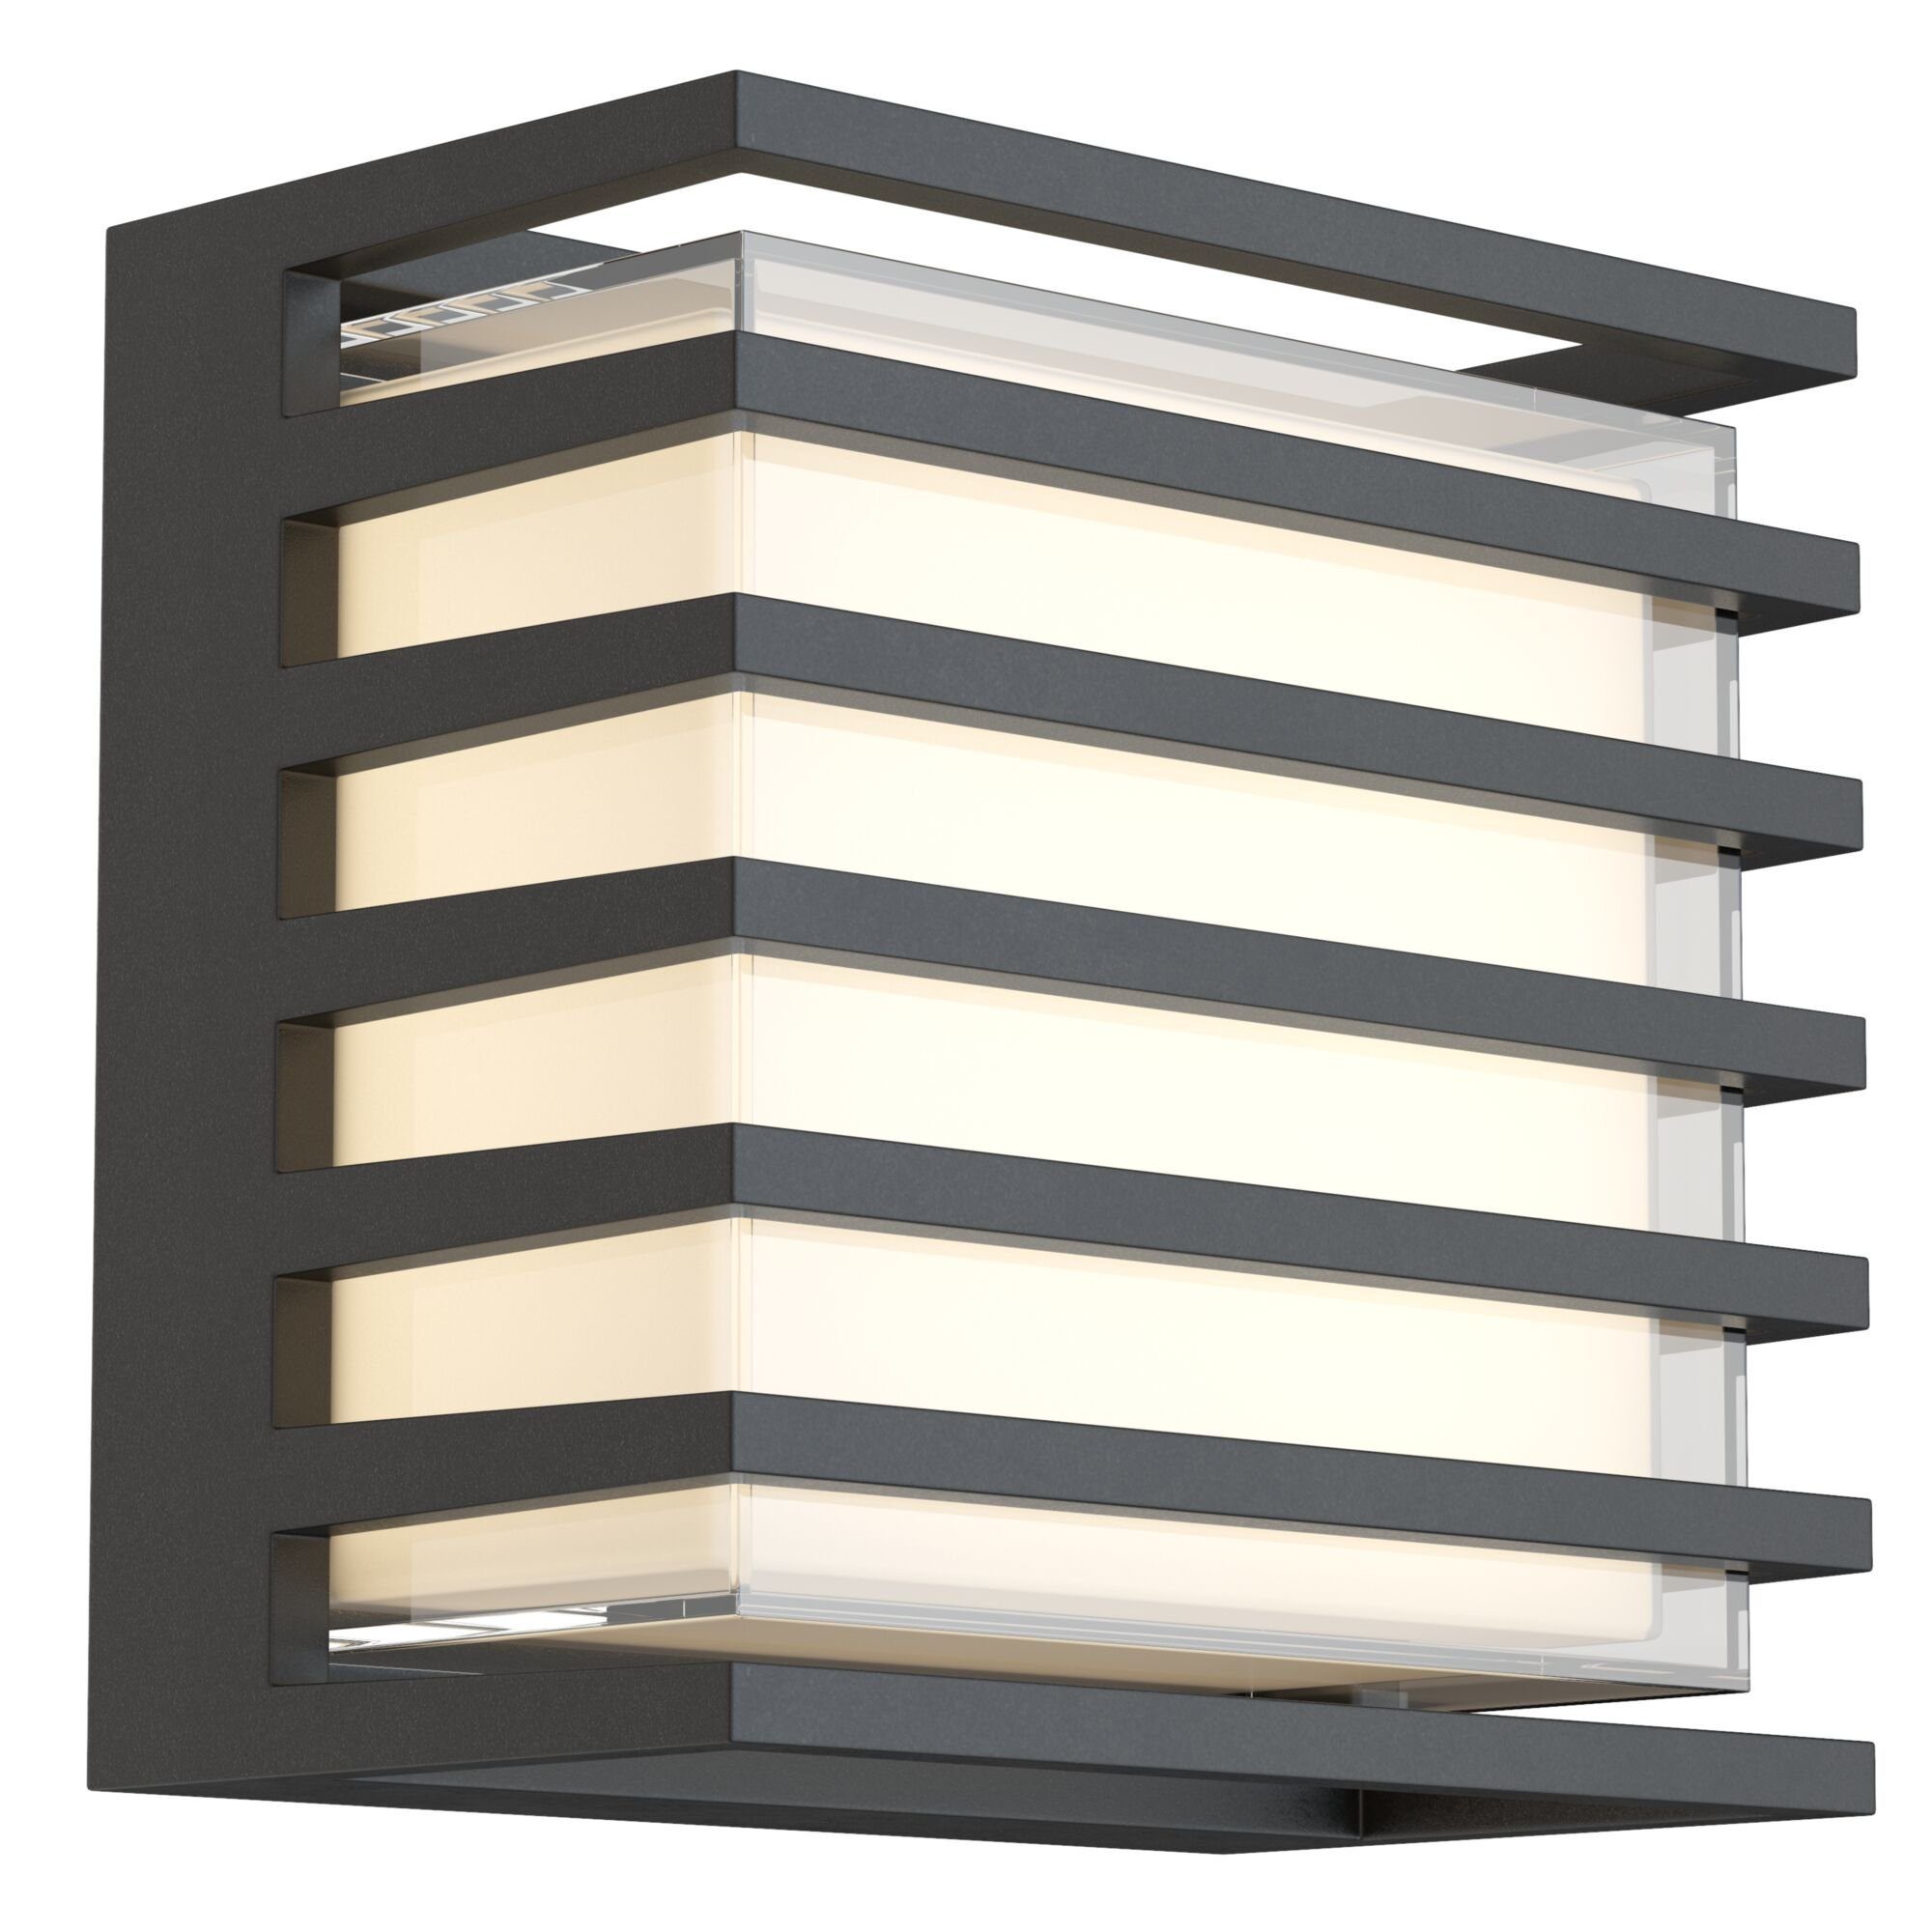 MAYTONI DECORATIVE LIGHTING Wandleuchte 16.6x16.6x10 Lampe fest hochwertige Raumobjekt & Design dekoratives cm, LED integriert, Downing Street